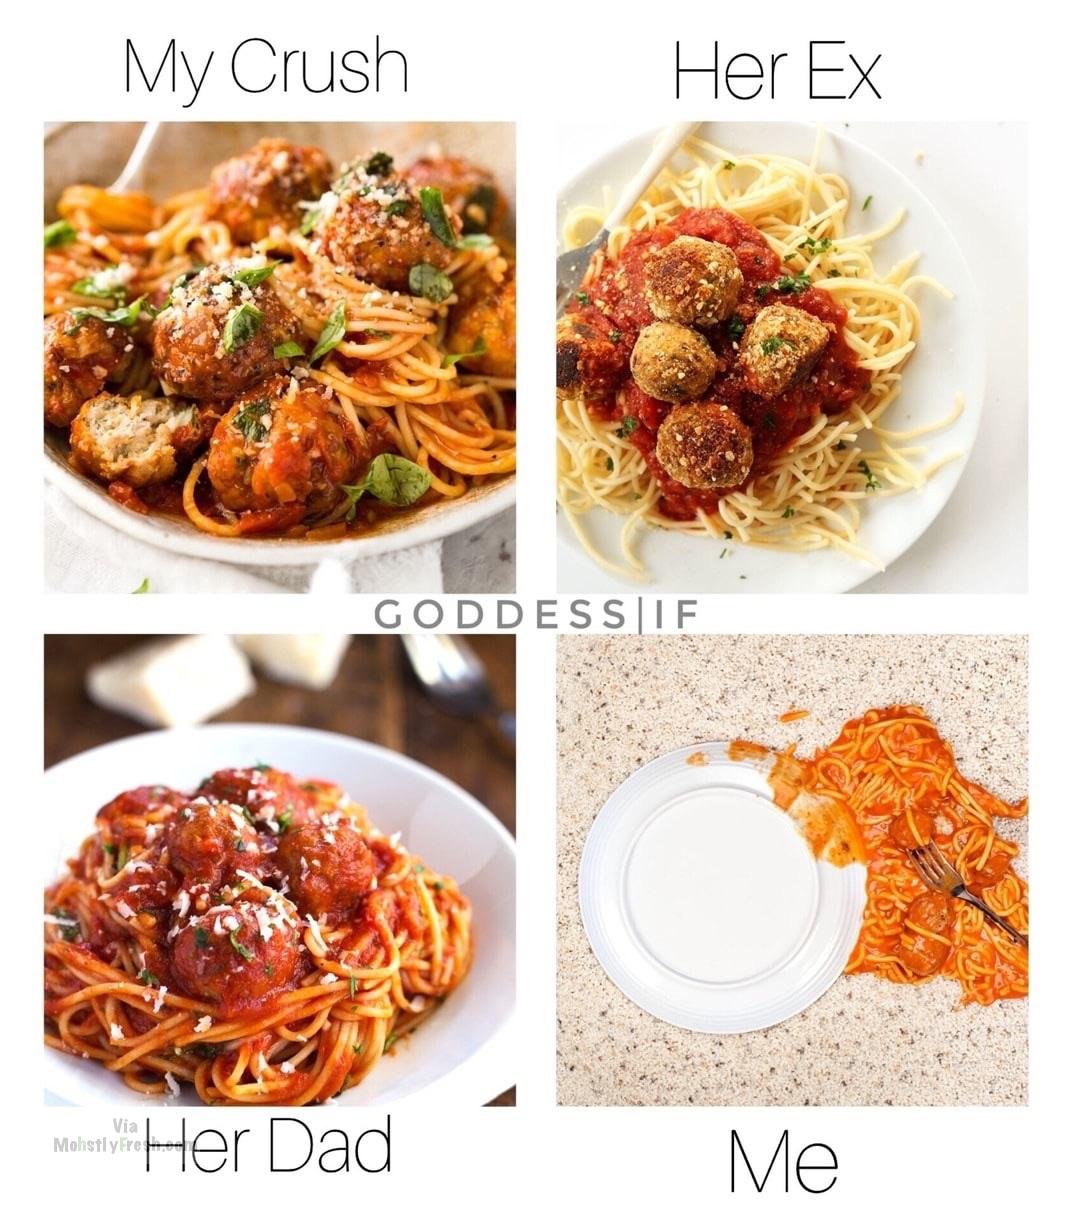 spaghetti alla puttanesca - My Crush Her Ex Goddess If Via Mohstly Free MoneyHer Dad Me